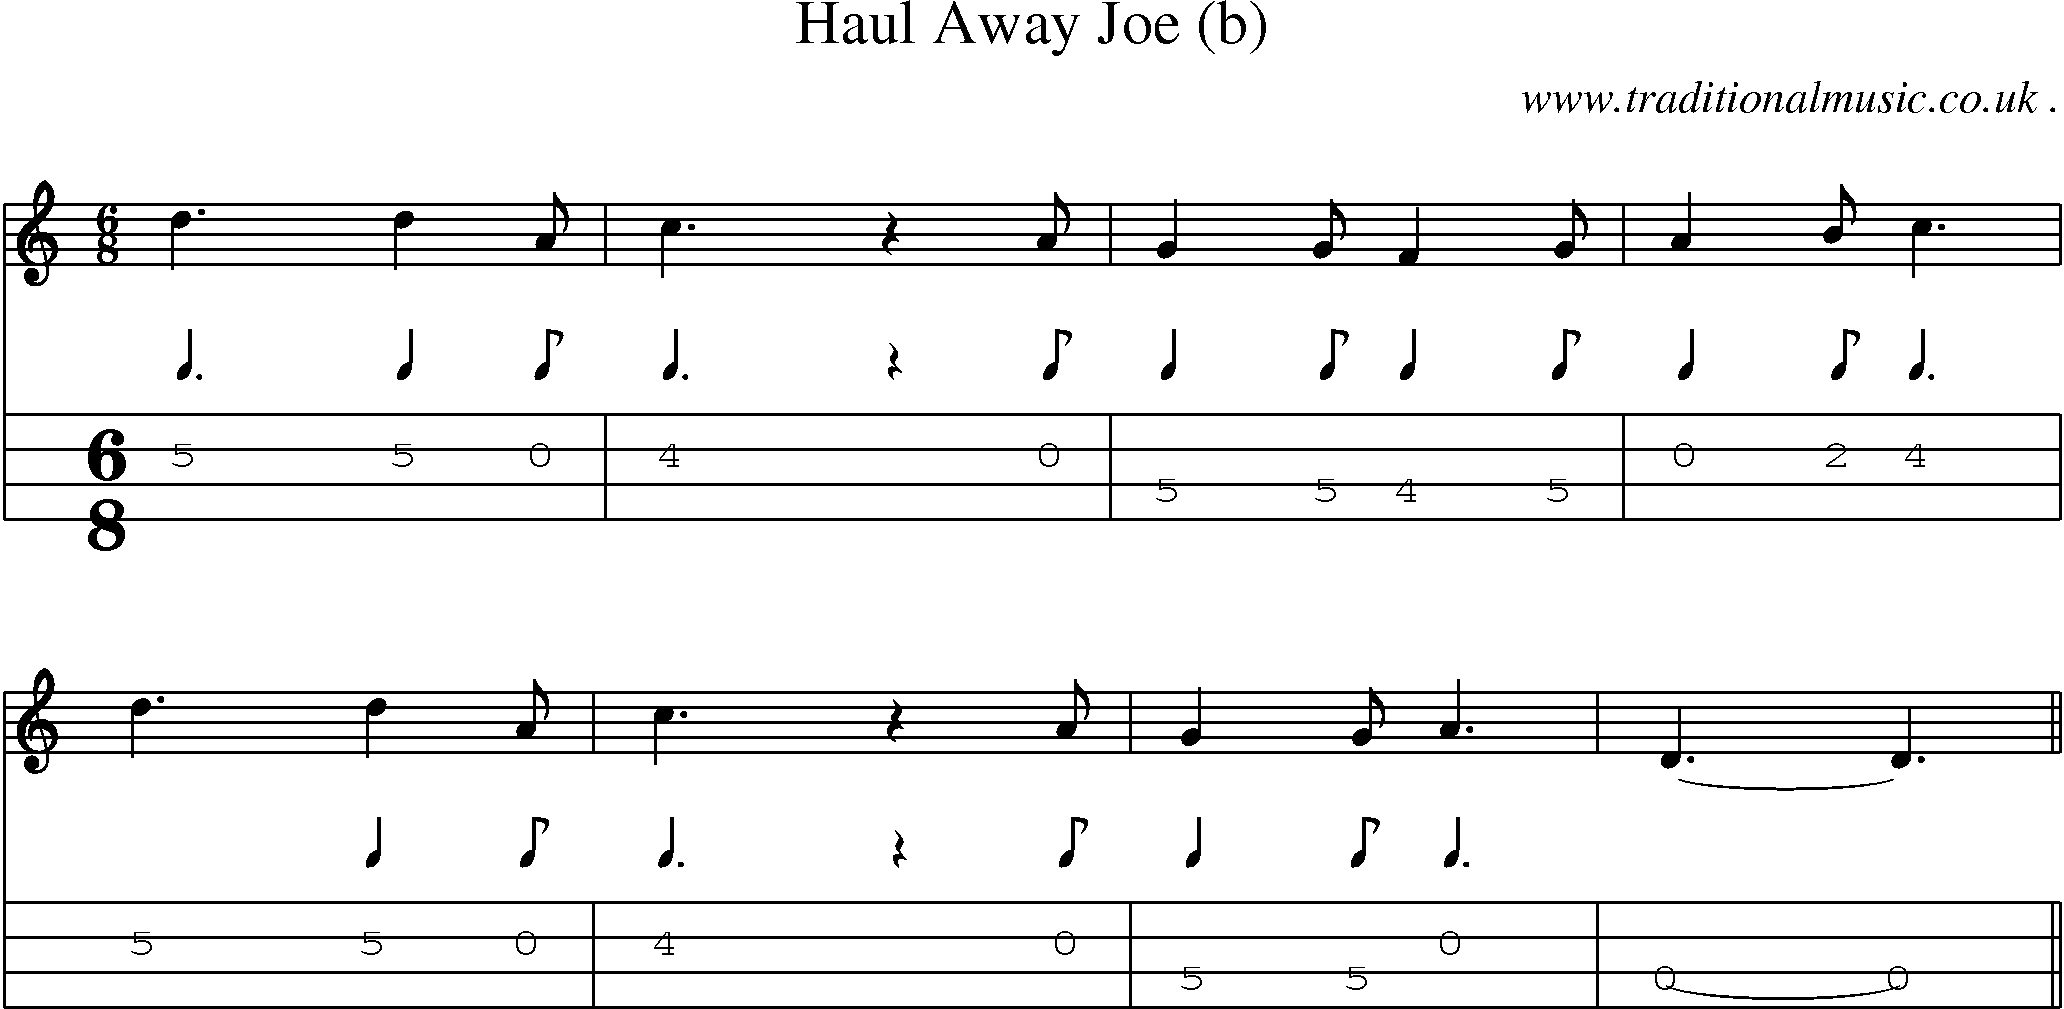 Sheet-Music and Mandolin Tabs for Haul Away Joe (b)